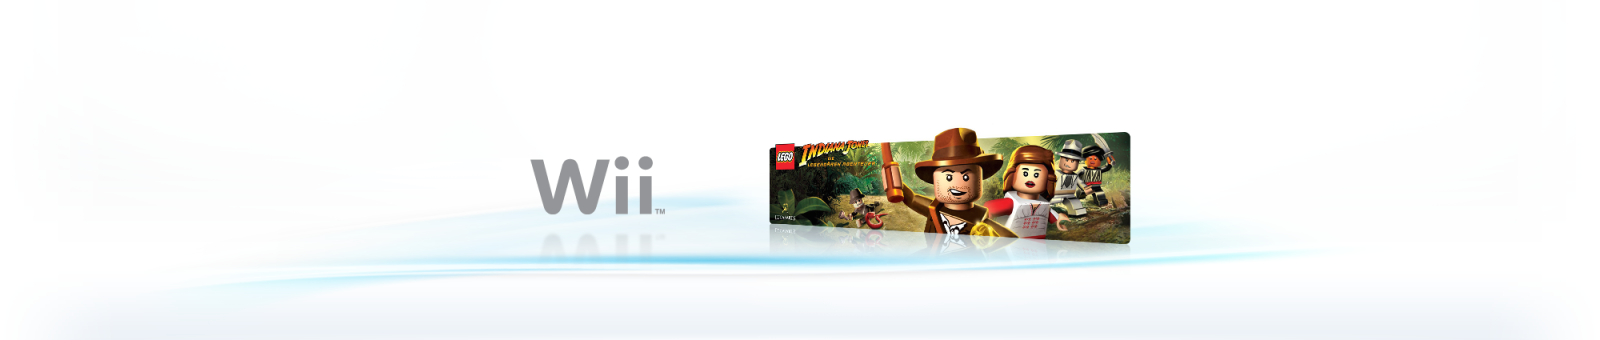 LEGO Indiana Jones: Die Legendären Abenteuer